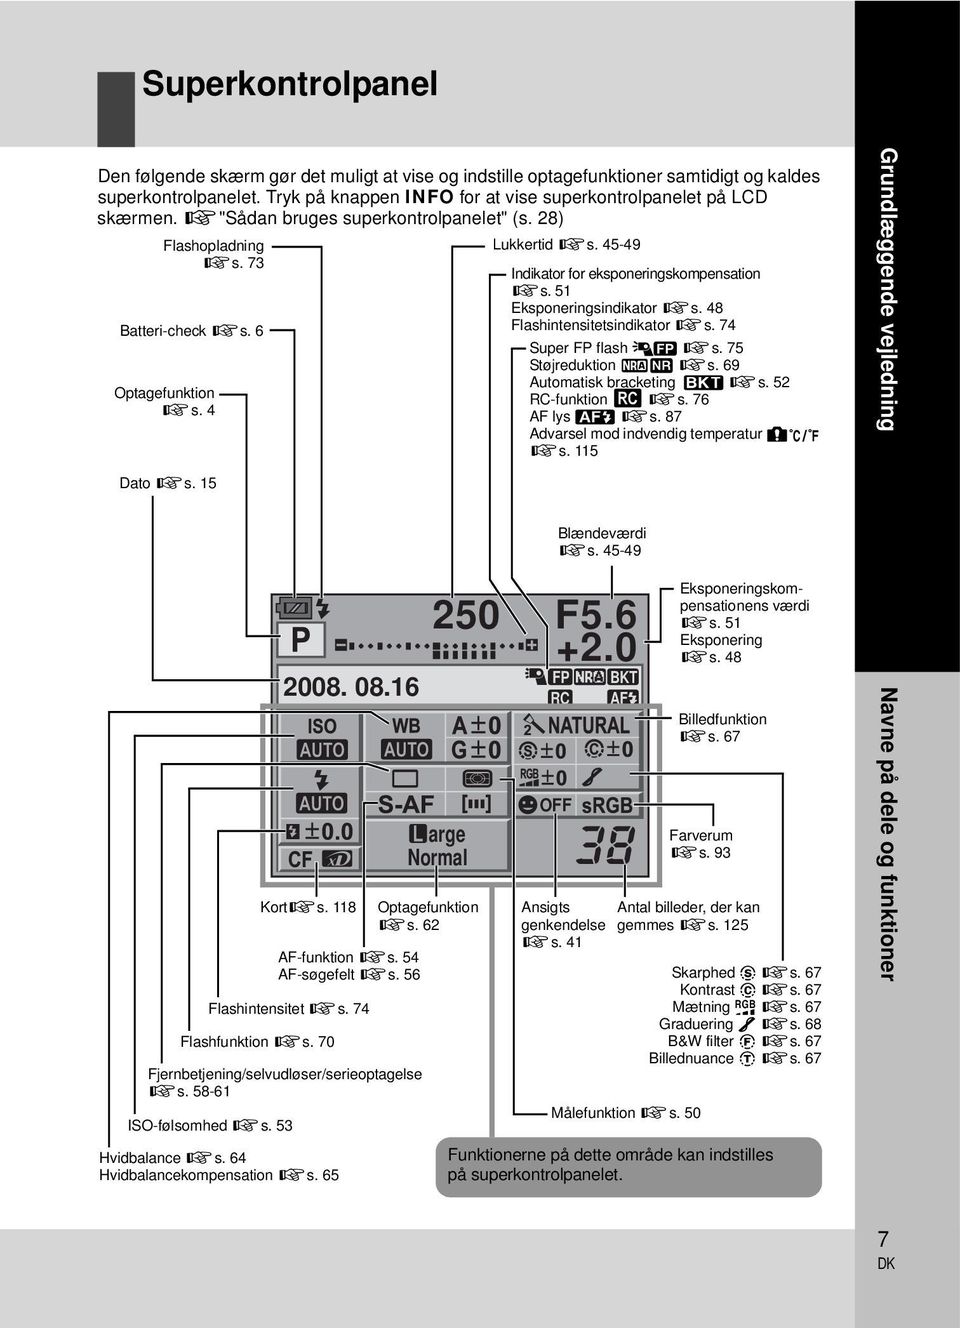 48 Flashintensitetsindikator gs. 74 Super FP flash 1 gs. 75 Støjreduktion mo gs. 69 Automatisk bracketing 0 gs. 52 RC-funktion m gs. 76 AF lys T gs. 87 Advarsel mod indvendig temperatur m gs.